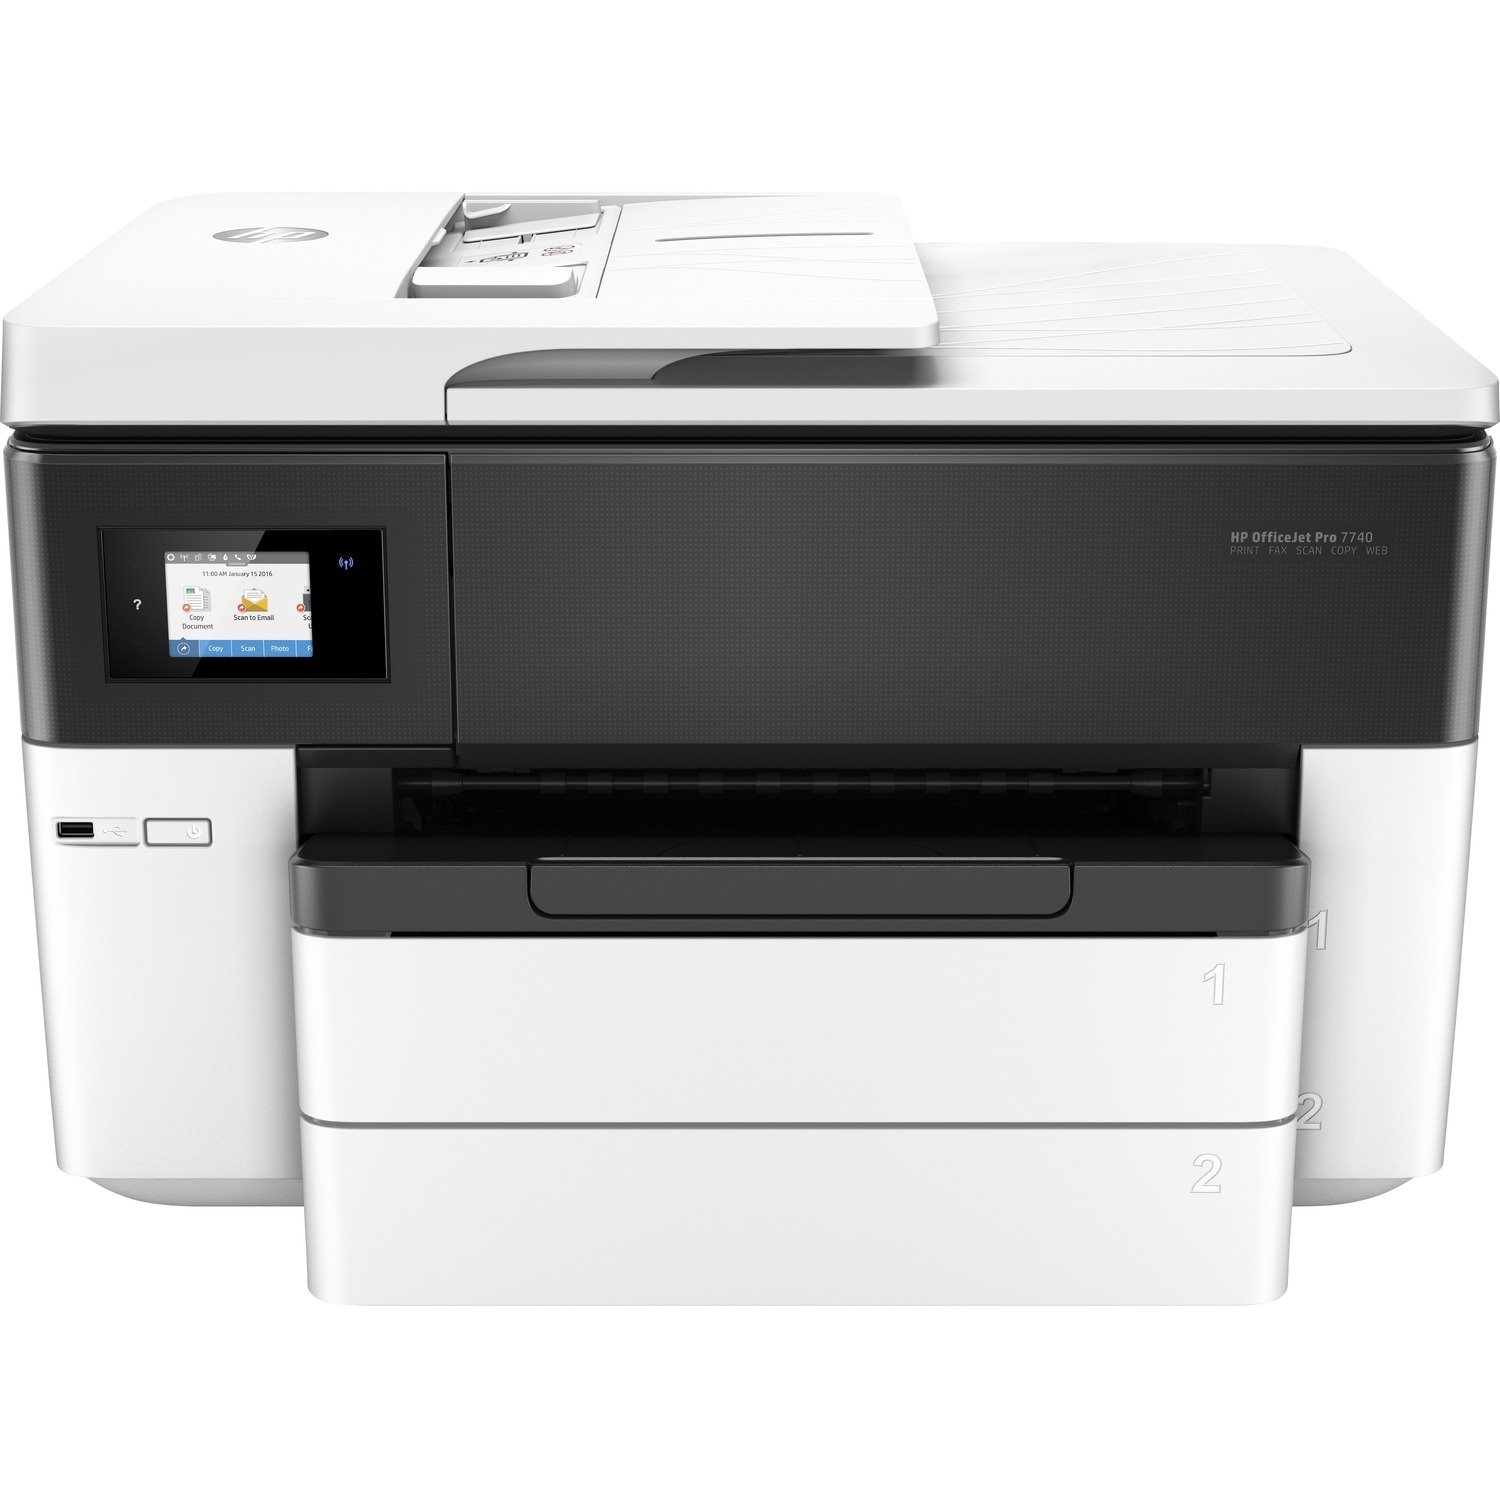 HP Officejet Pro 7740 Inkjet Multifunction Printer-Color-Copier/Fax/Scanner-34 ppm Mono/34 ppm Color Print-4800x1200 dpi Print-Automatic Duplex Print-30000 Pages-500 sheets Input-1200 dpi Optical Scan-Color Fax-Wireless LAN